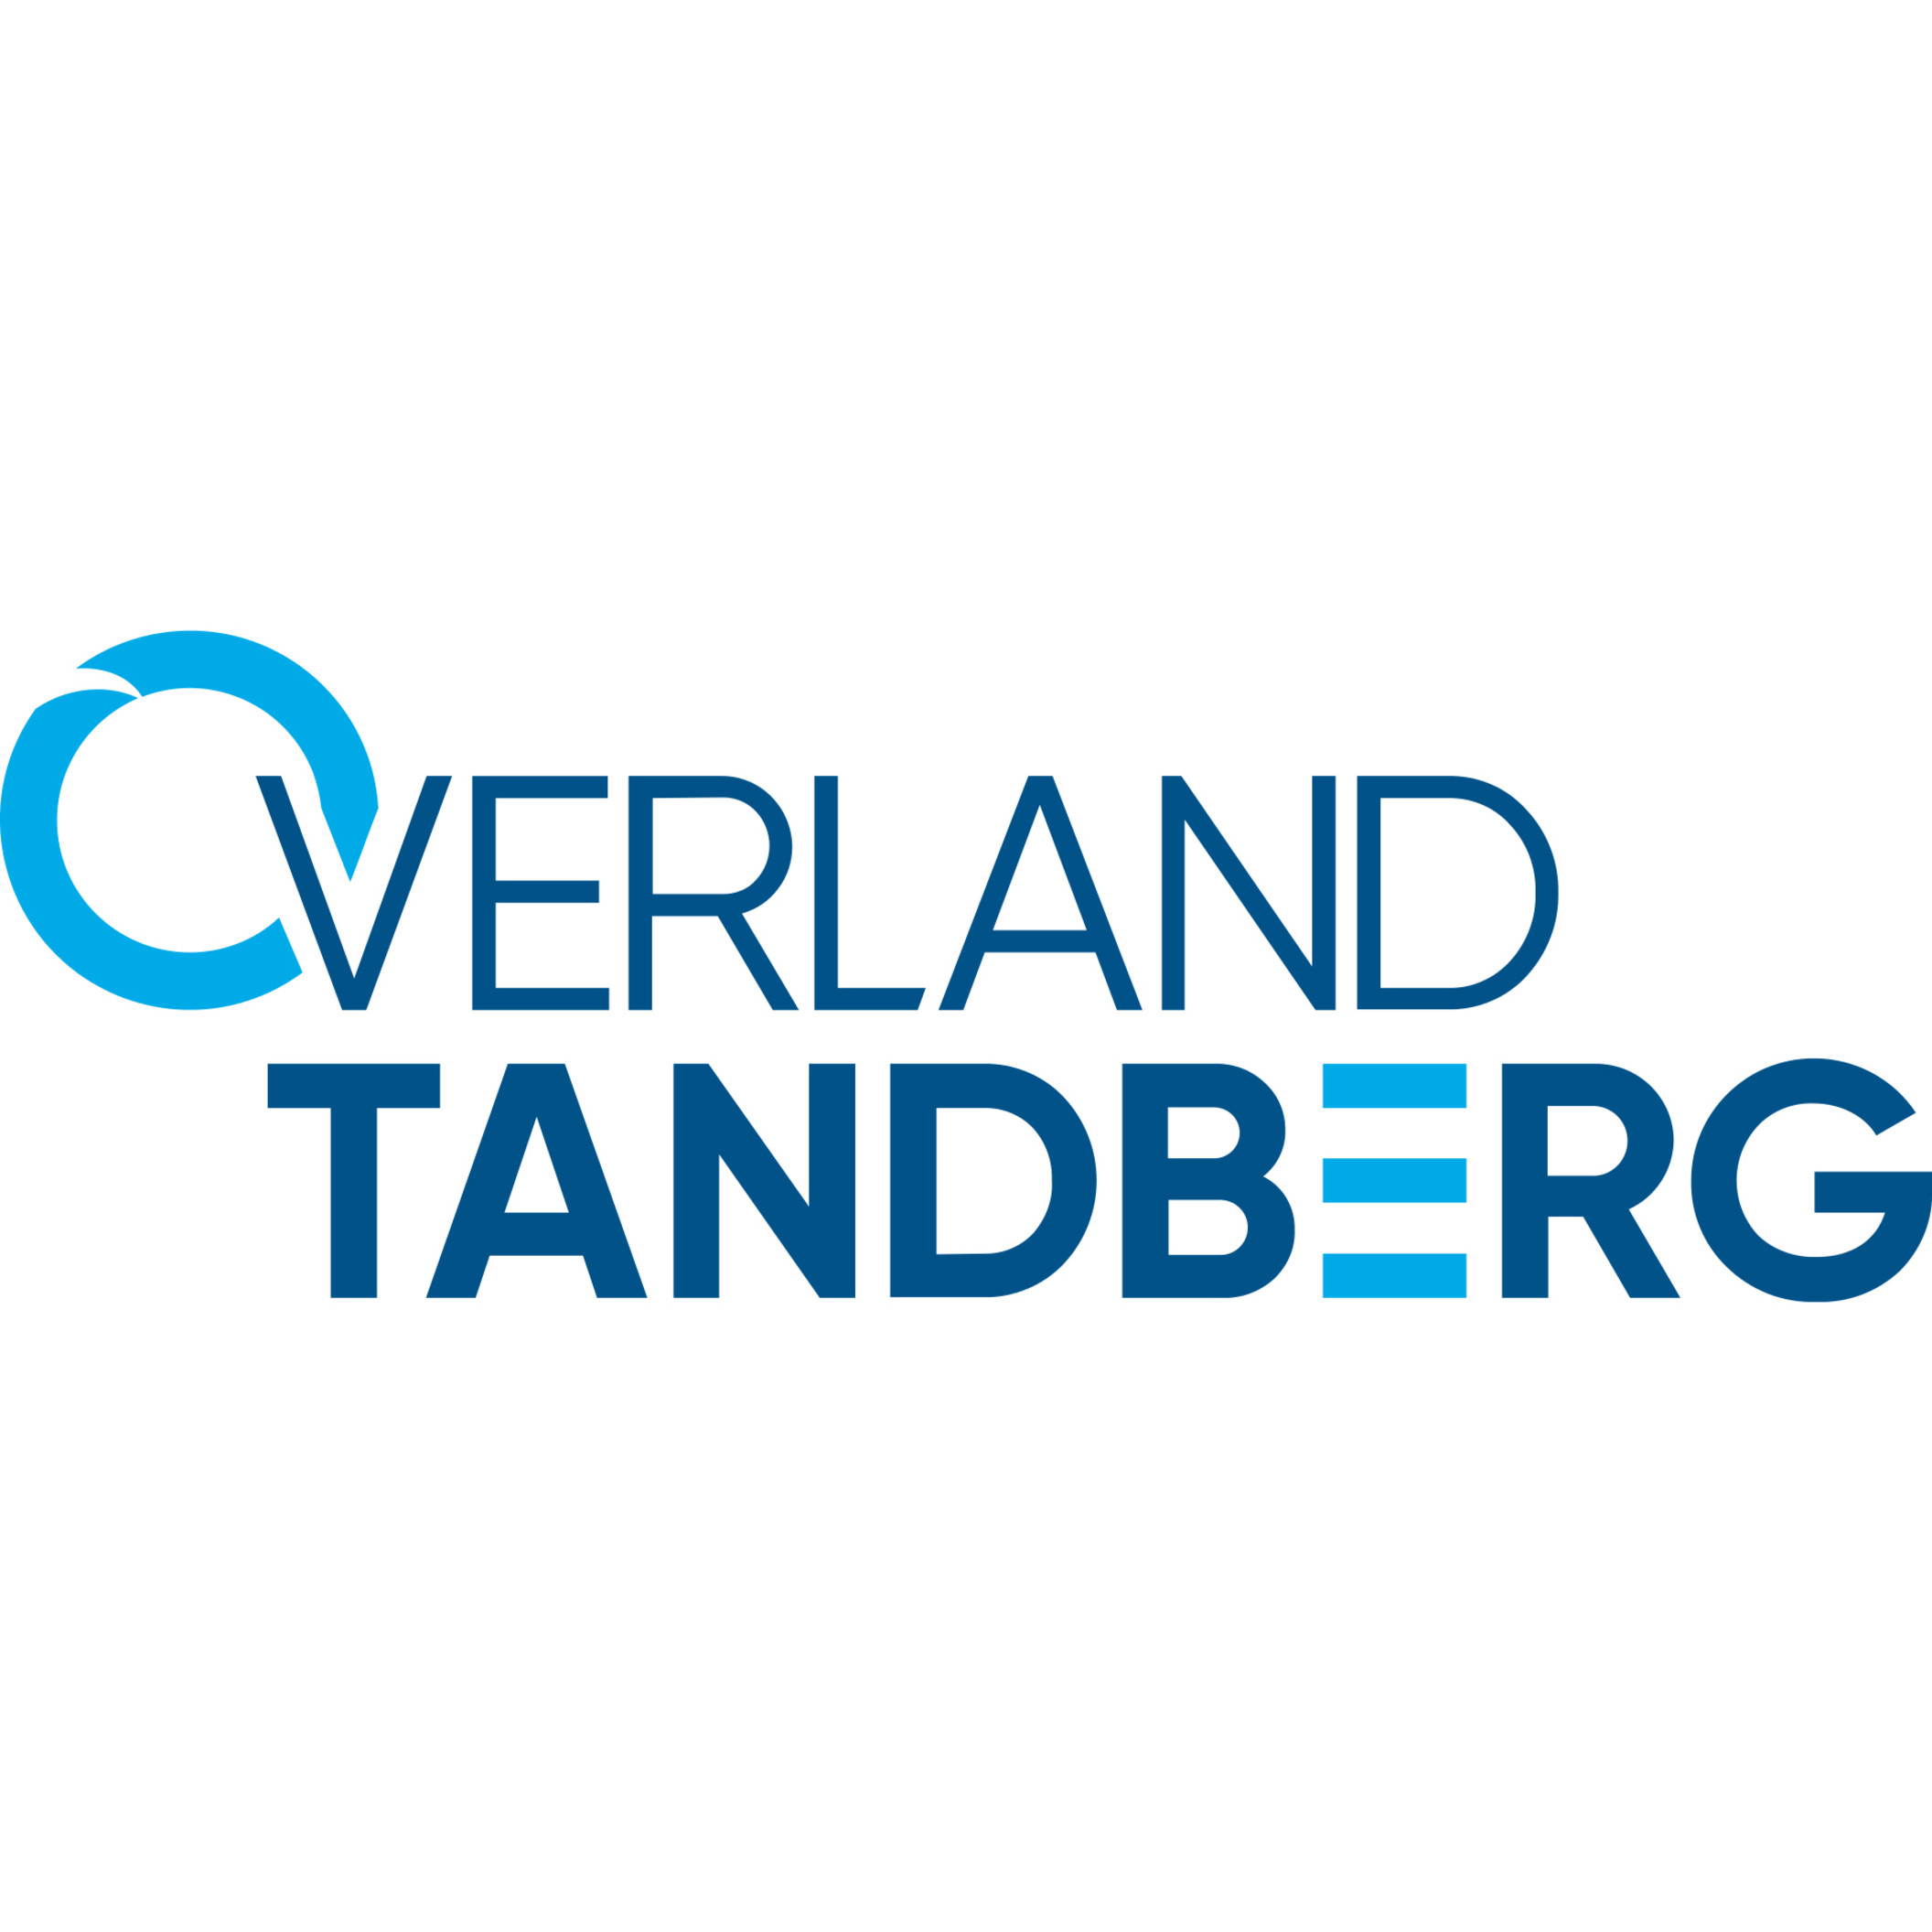 Overland rdxLOCK + s Care Bronze-LevelLicense2 TB CapacityPC 8869-SW